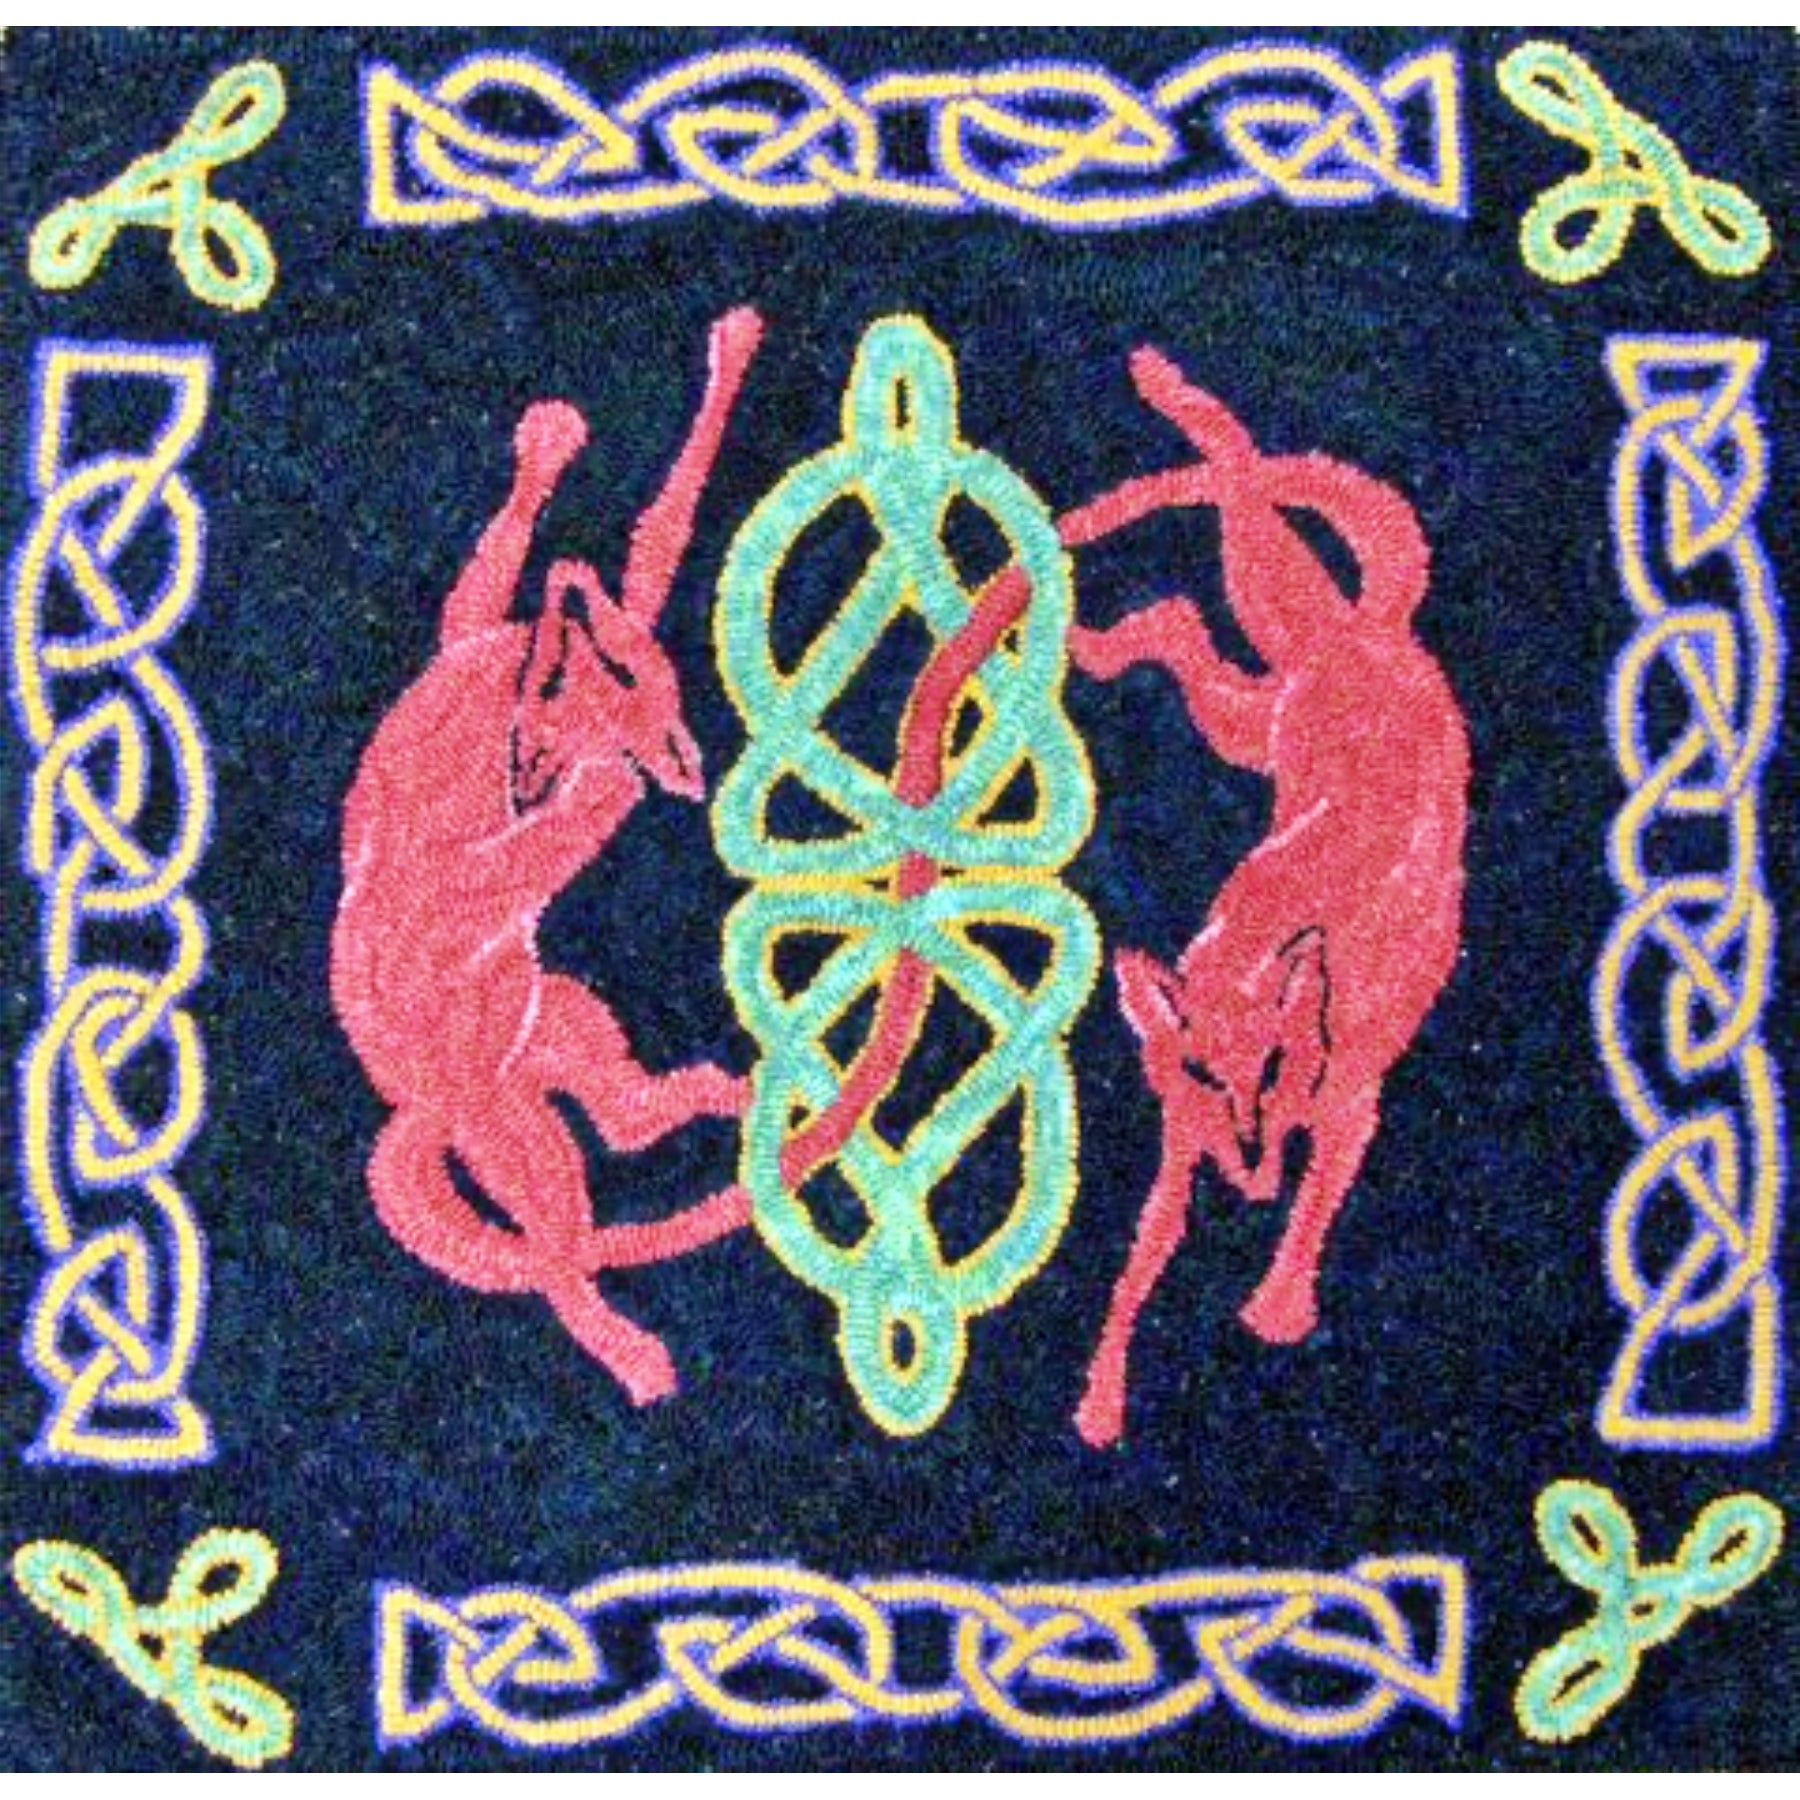 Celtic Knot, rug hooked by Pamela Van Lieu